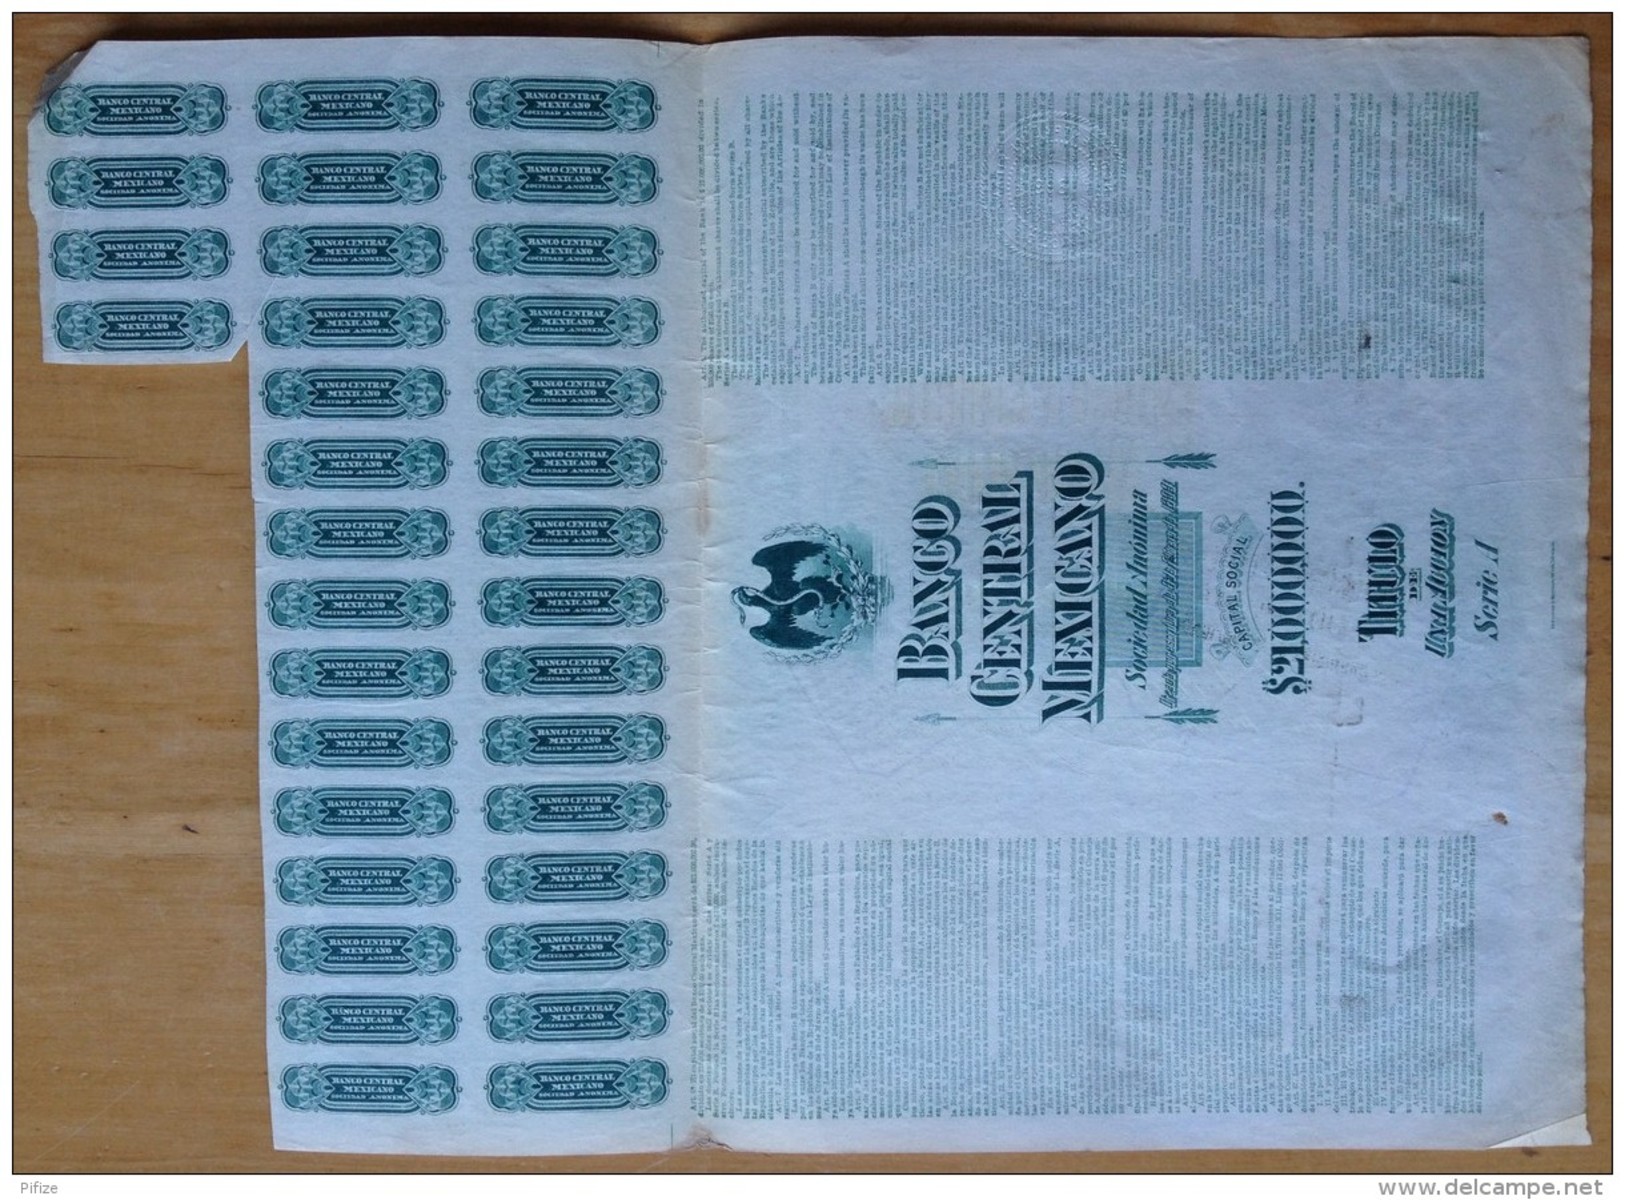 Banco Central Mexicano. Banque Centrale Du Mexique. Action De 100 Pesos 1905. - Banque & Assurance